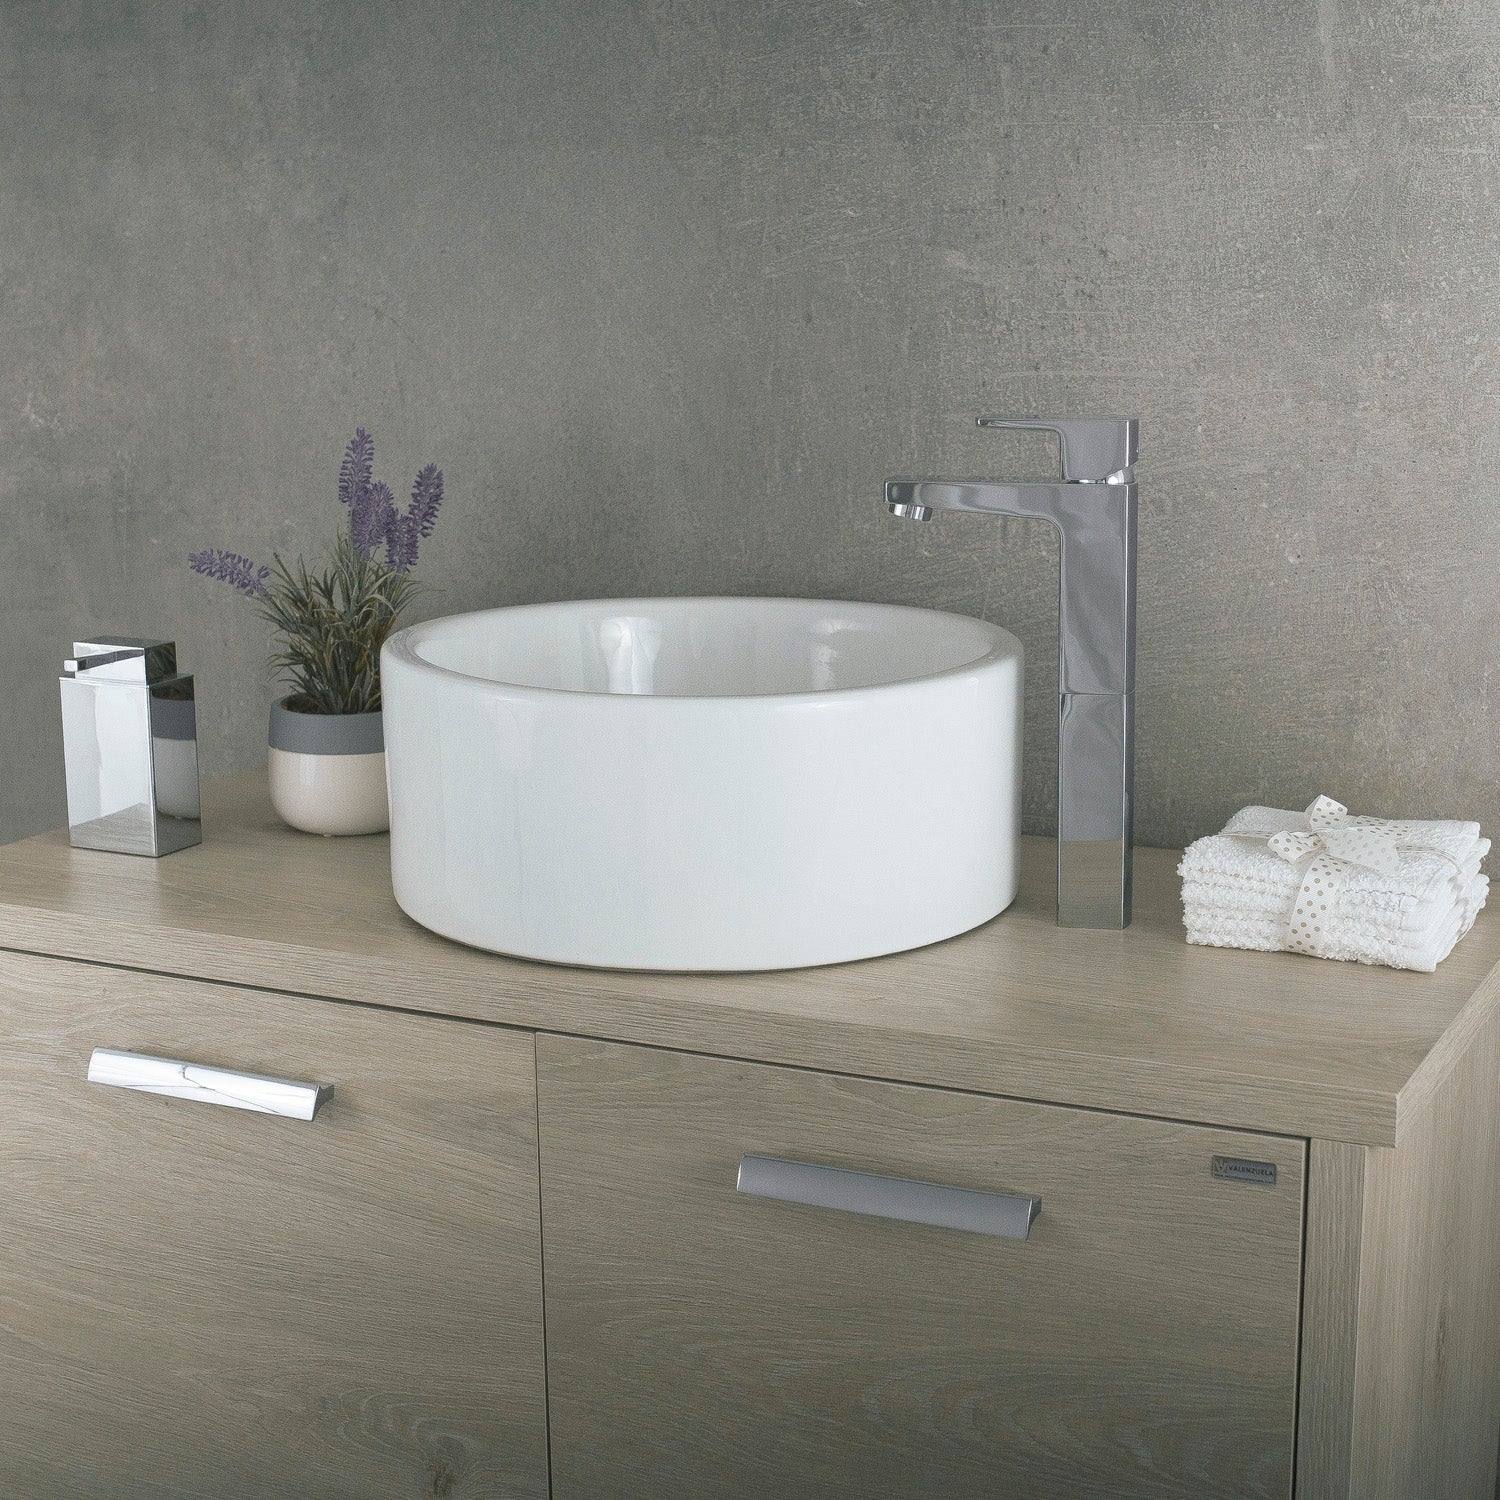 DAX Single Handle Vessel Sink Bathroom Faucet, Brass Body, Chrome Finish, 4-13/16 x 12-5/8 Inches (DAX-8269B)